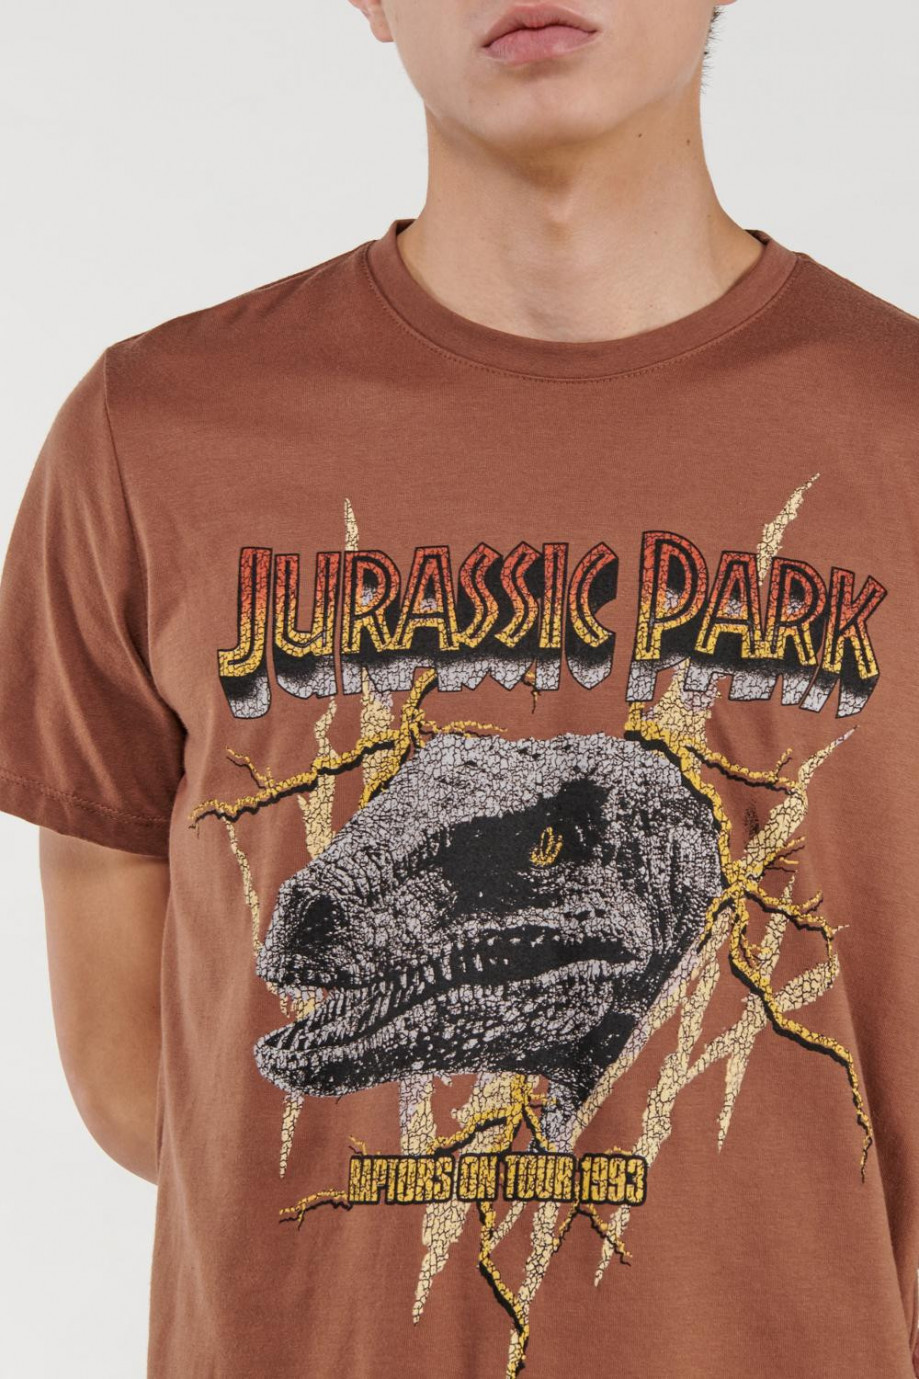 Camiseta manga corta, estampado de Jurassic Park.